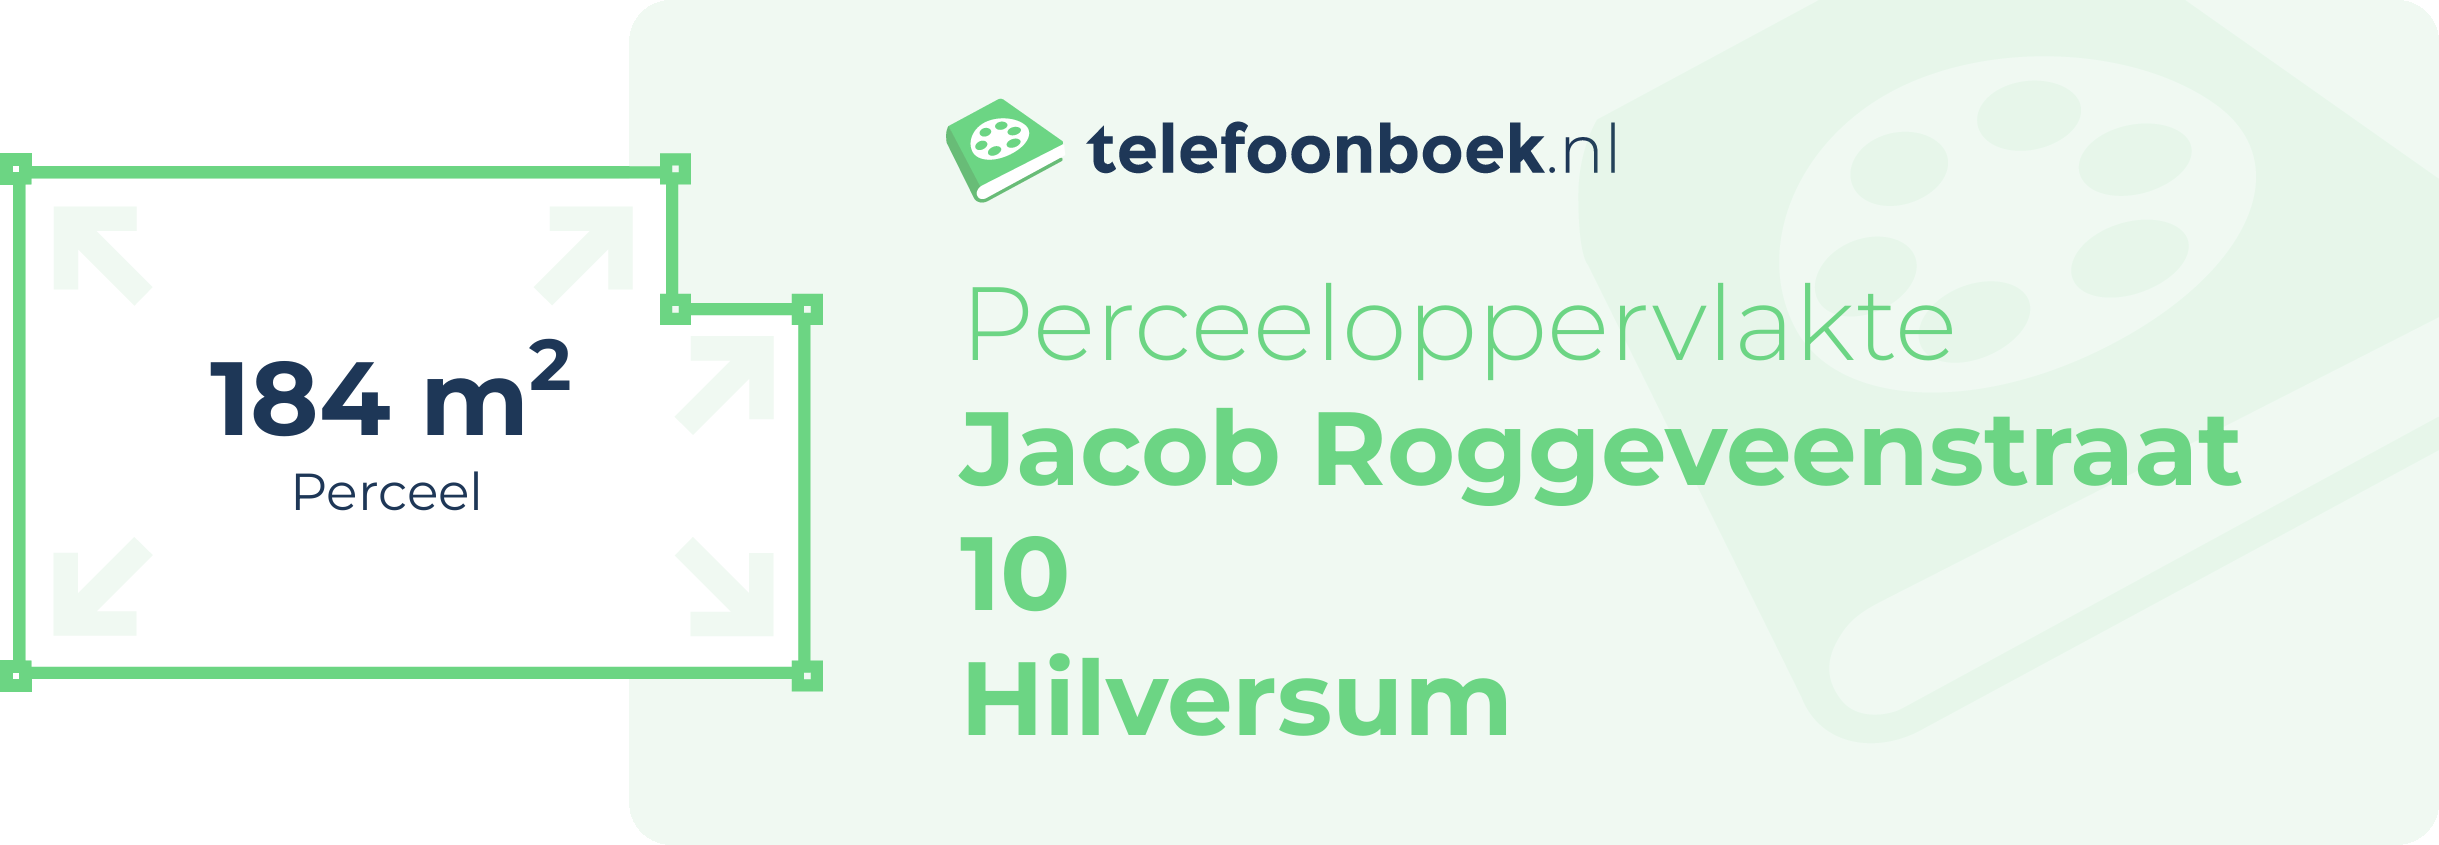 Perceeloppervlakte Jacob Roggeveenstraat 10 Hilversum